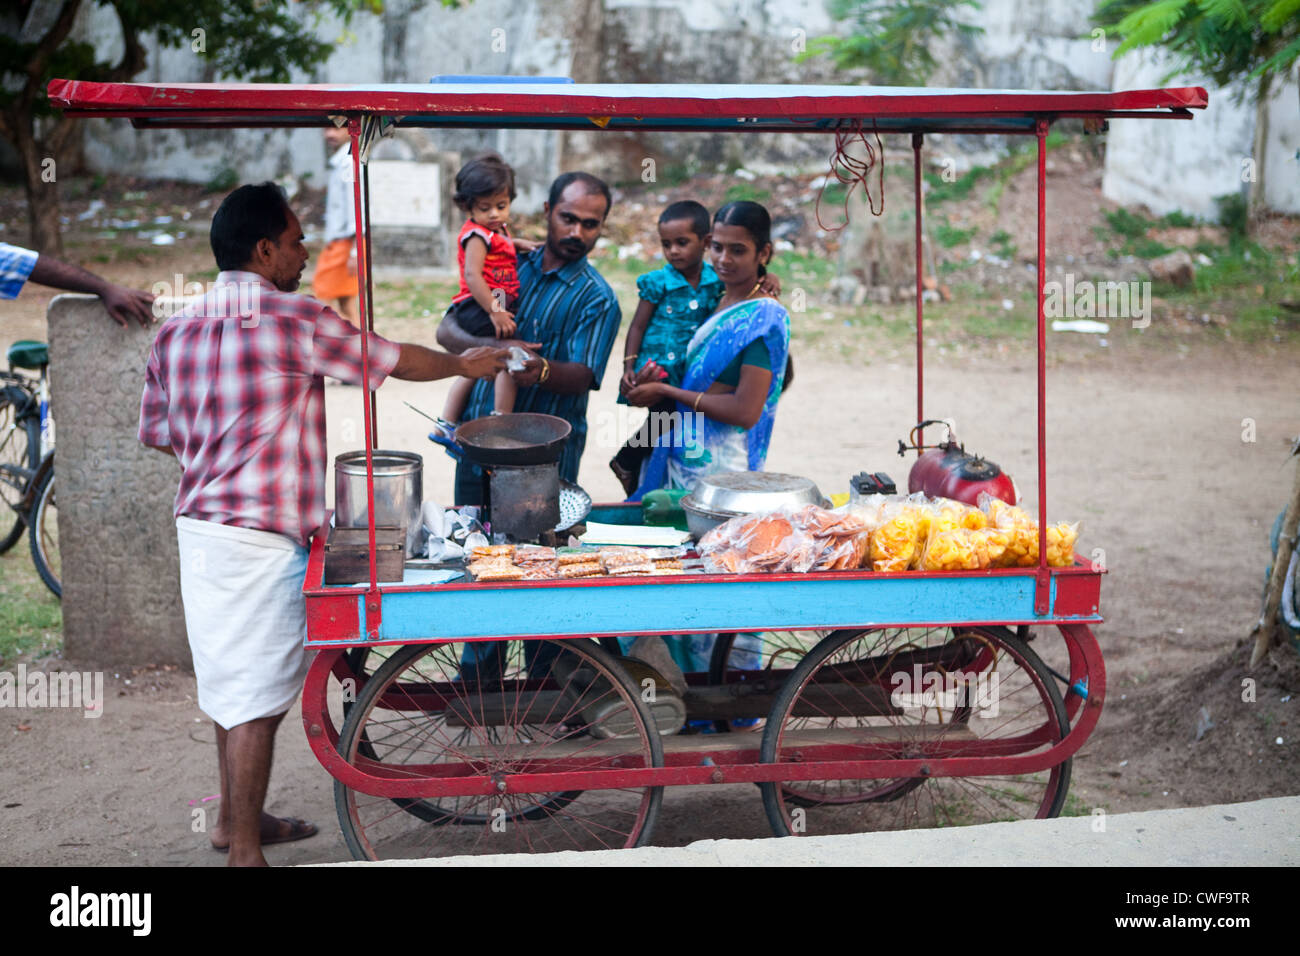 Familie Kauf von Lebensmitteln aus Straßenverkäufer in Fort Cochin, Kerala  Stockfotografie - Alamy